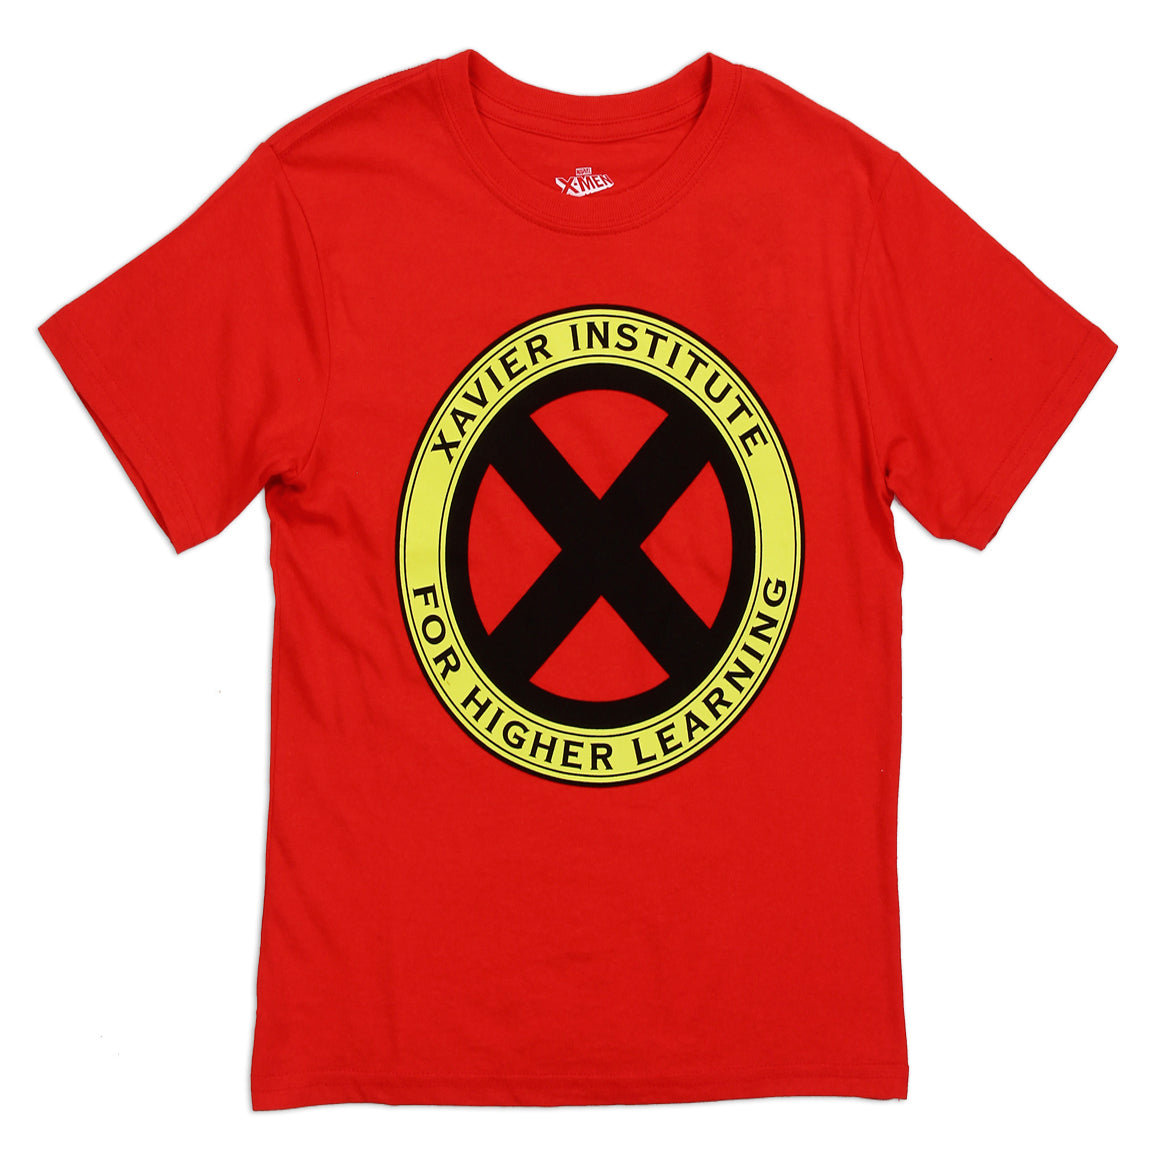 MARVEL X-MEN Boys Youth 3-Pack T-Shirt Set (Pack of 5)